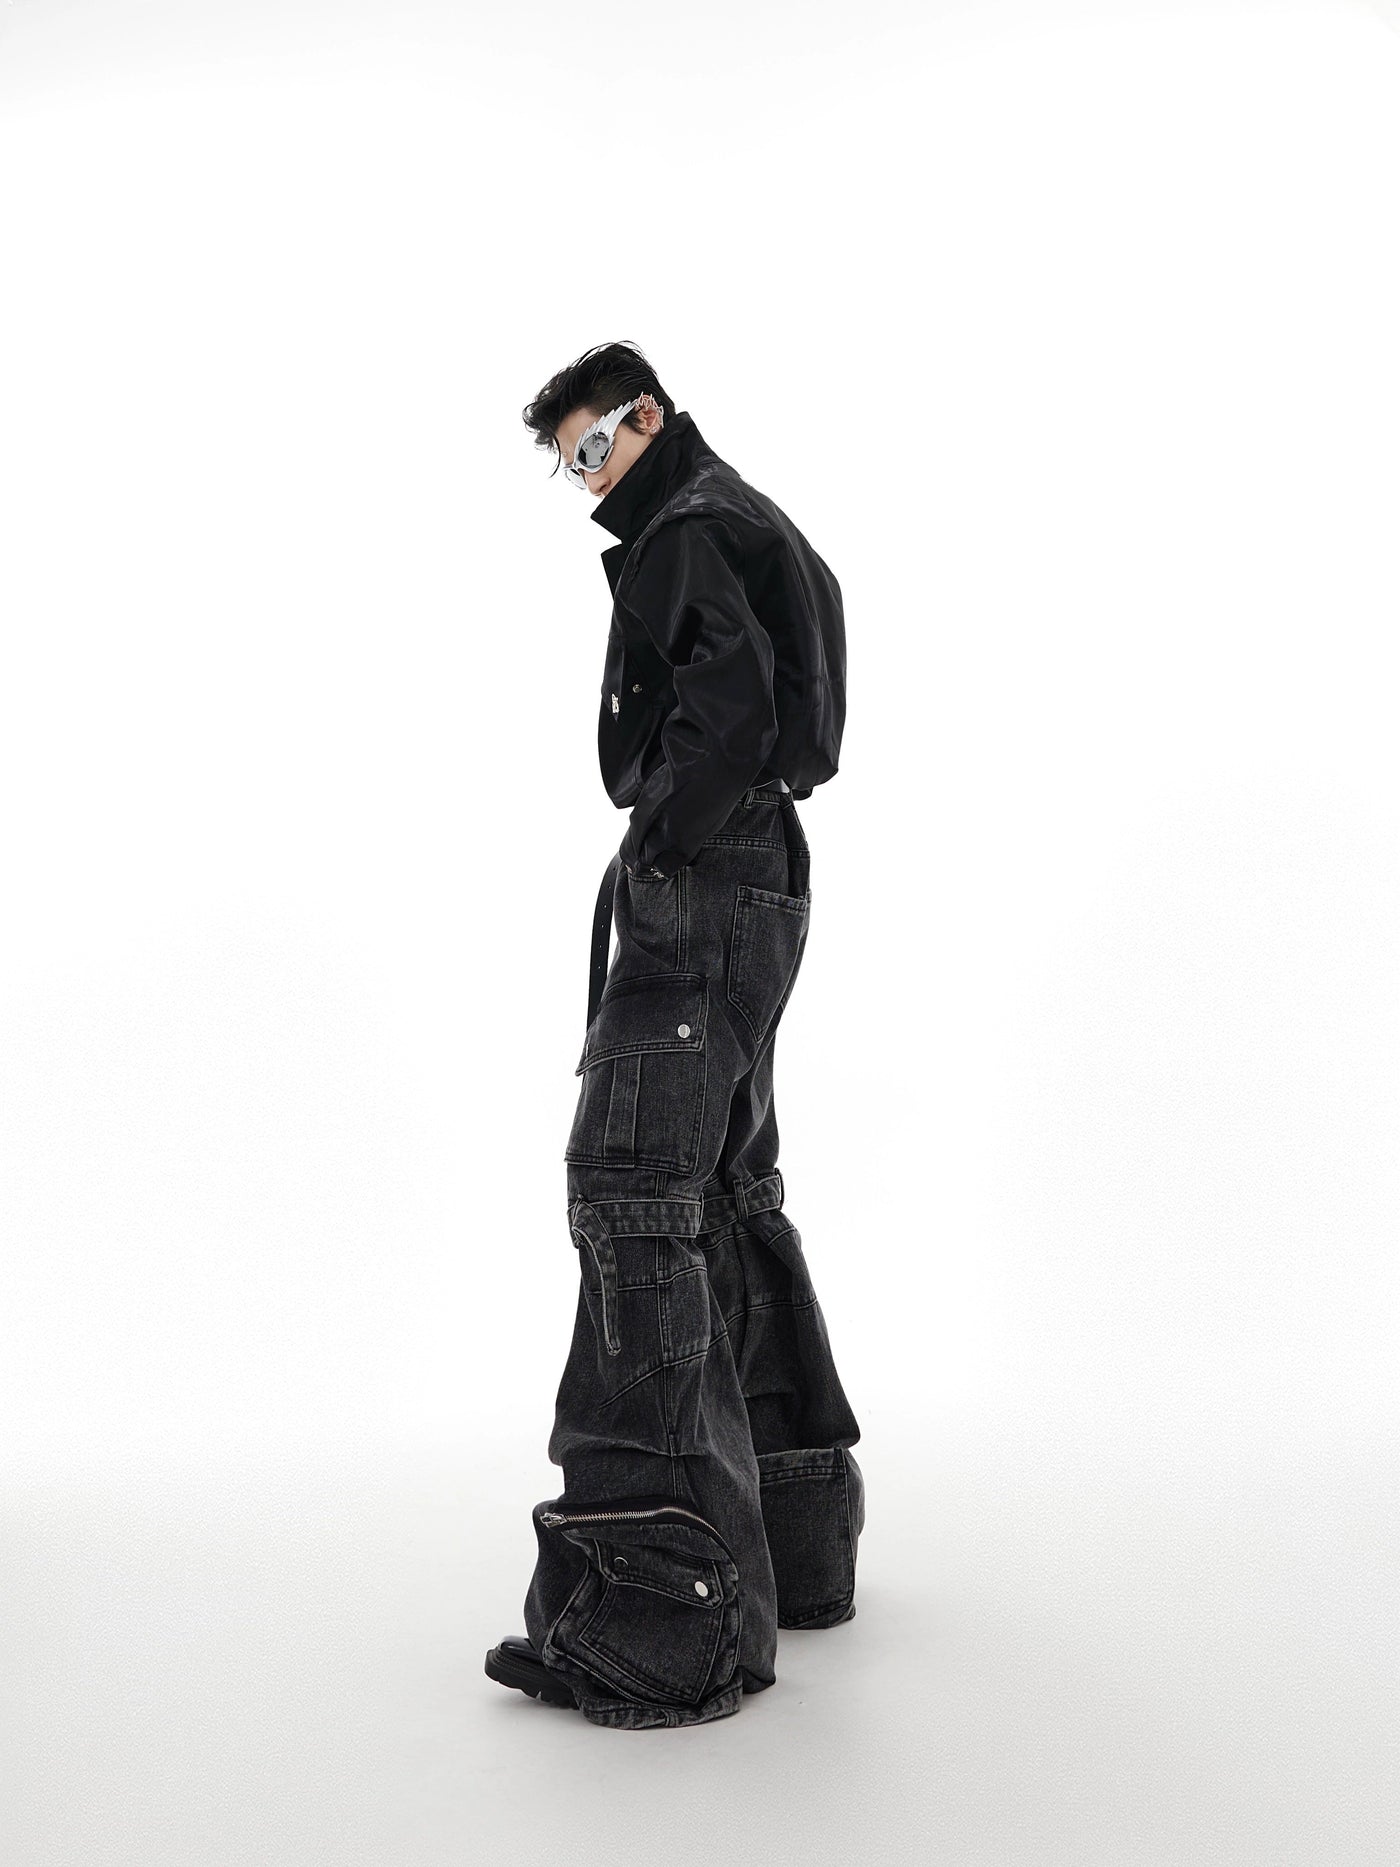 Strap Belts Cargo Style Jeans Korean Street Fashion Jeans By Argue Culture Shop Online at OH Vault